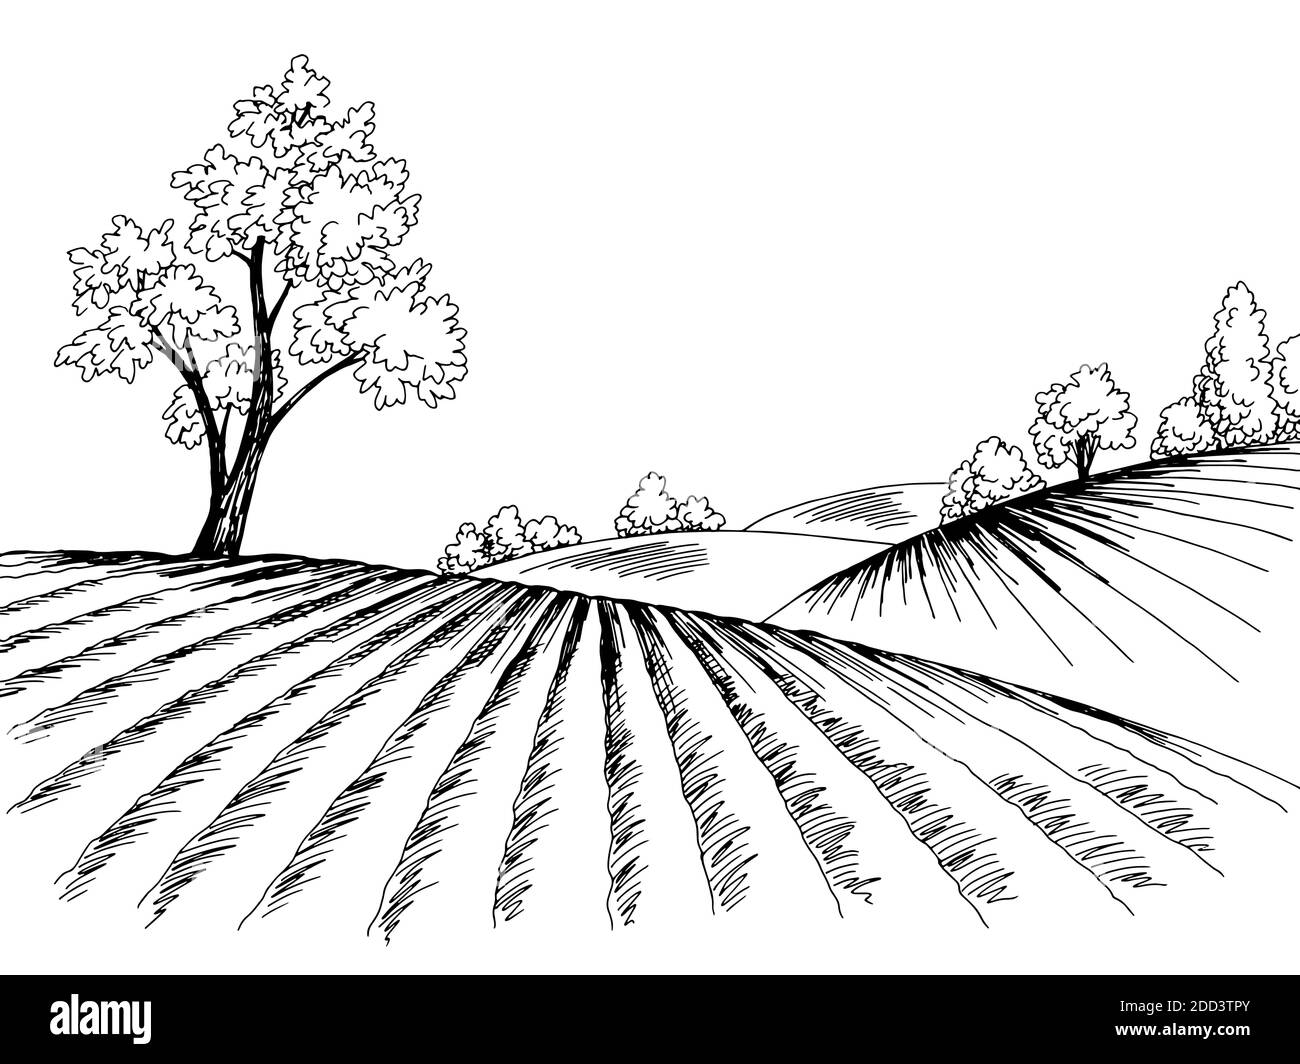 Feldgrafik schwarz weiß Landschaft Skizze Illustration Vektor Stock Vektor